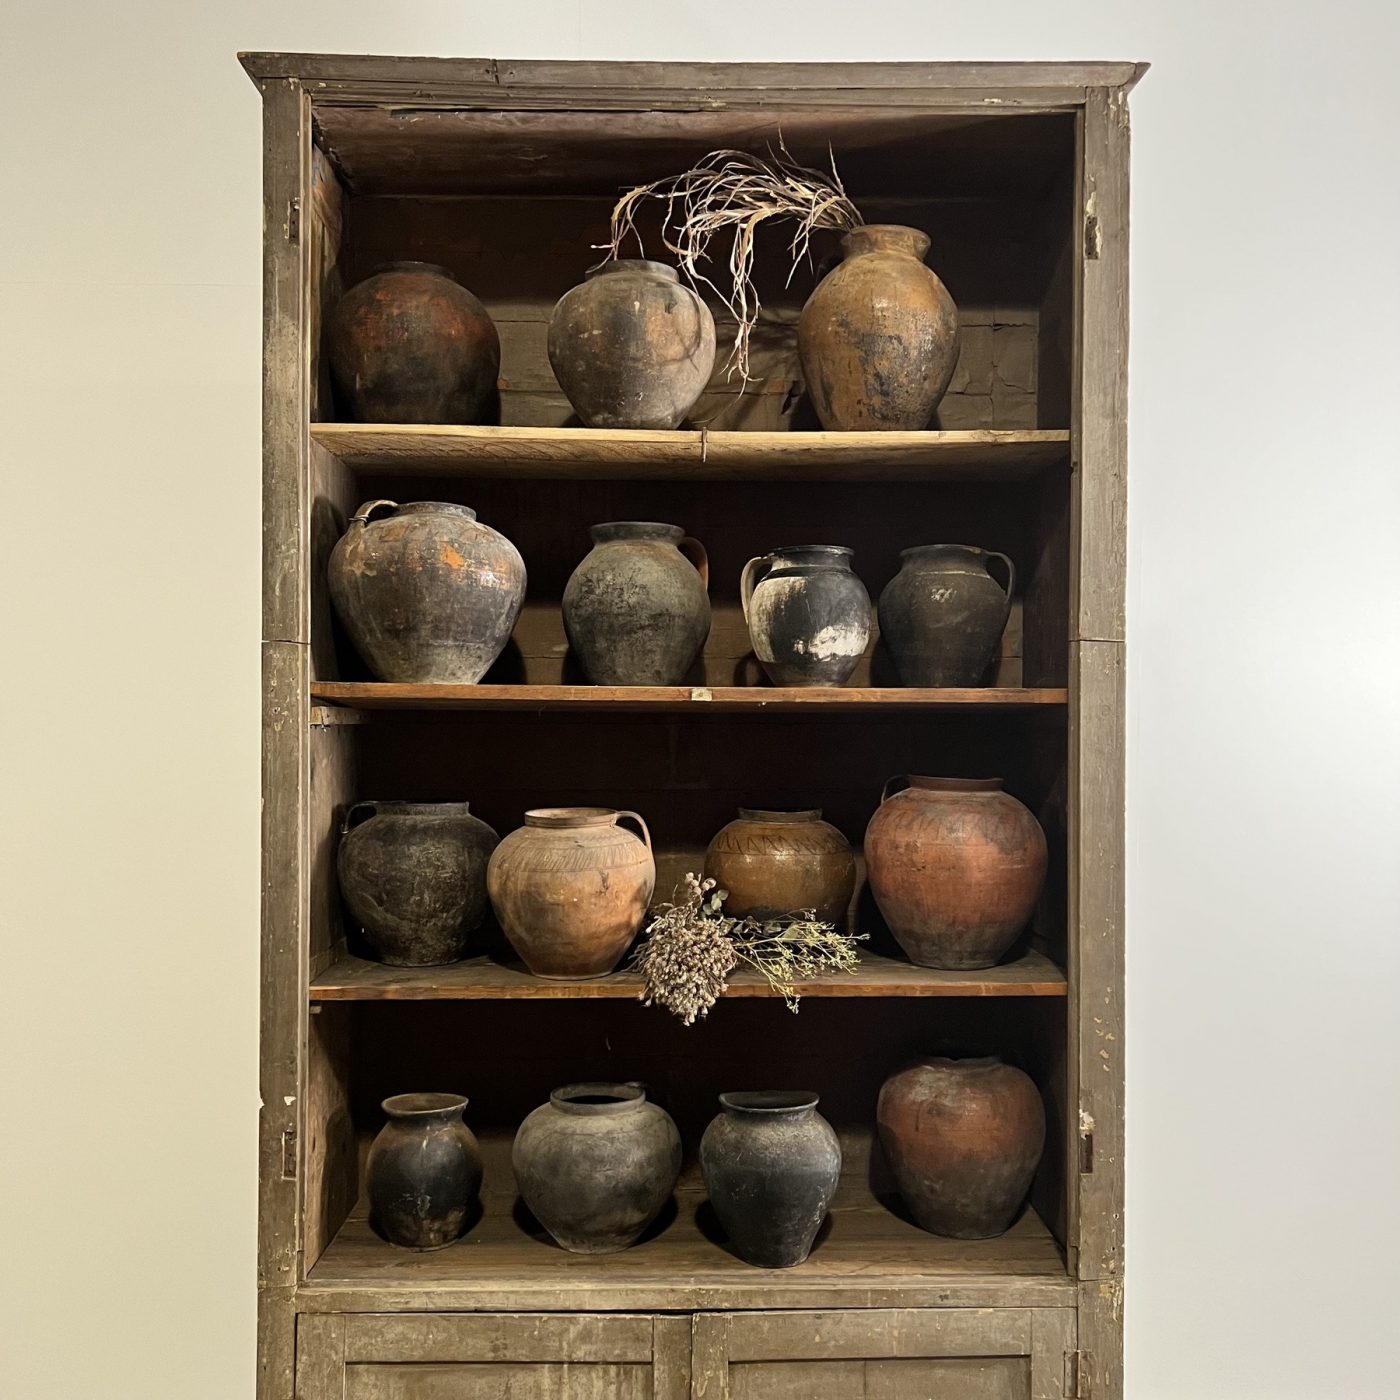 objet-vagabond-pottery-collection0000